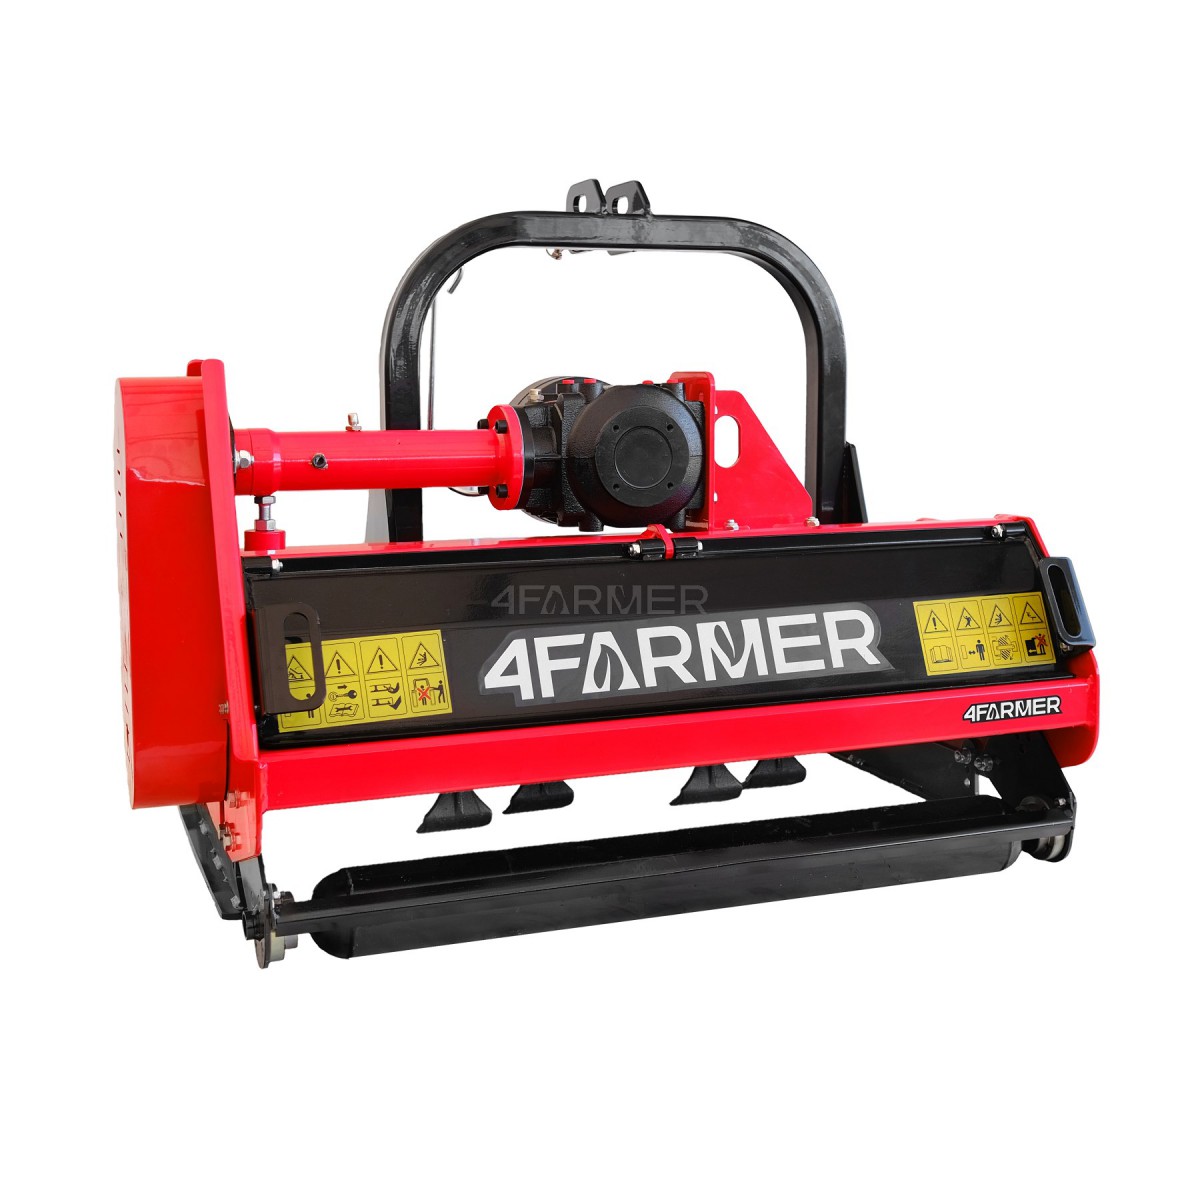 EFGC 105D 4FARMER flail mower - red